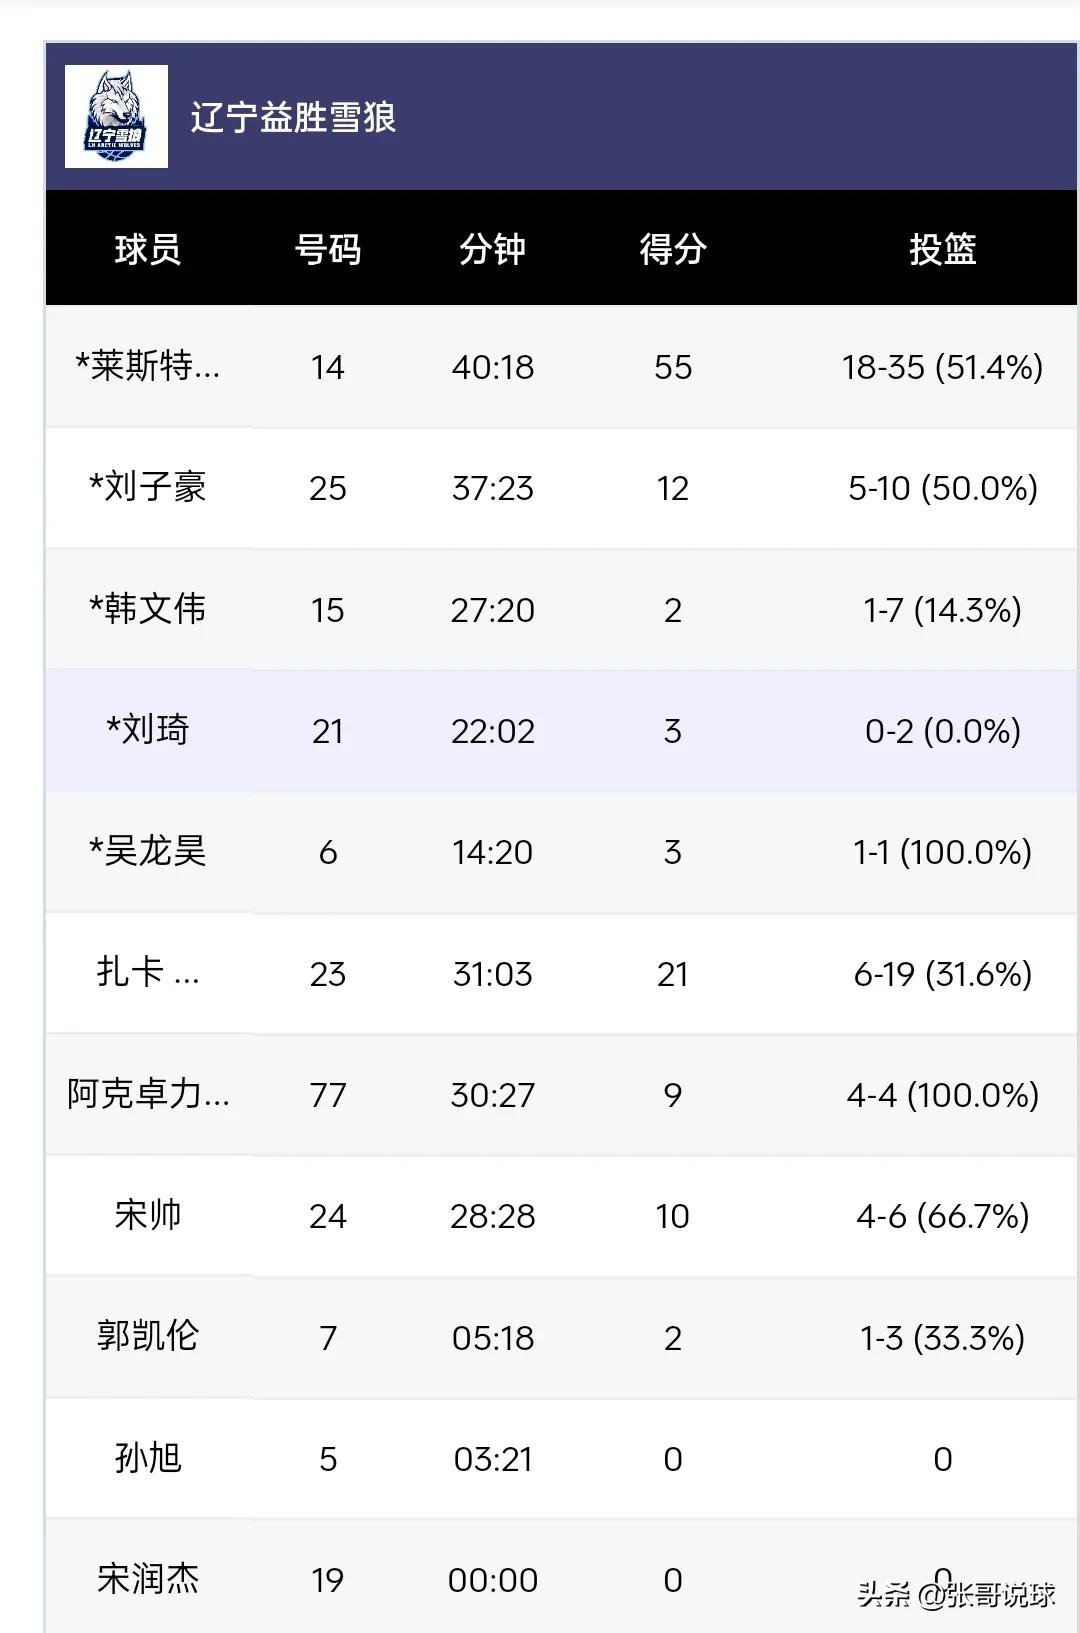 NBL积分榜丨哈德森55分辽宁两连胜，广西威壮104-112不敌河南赊店